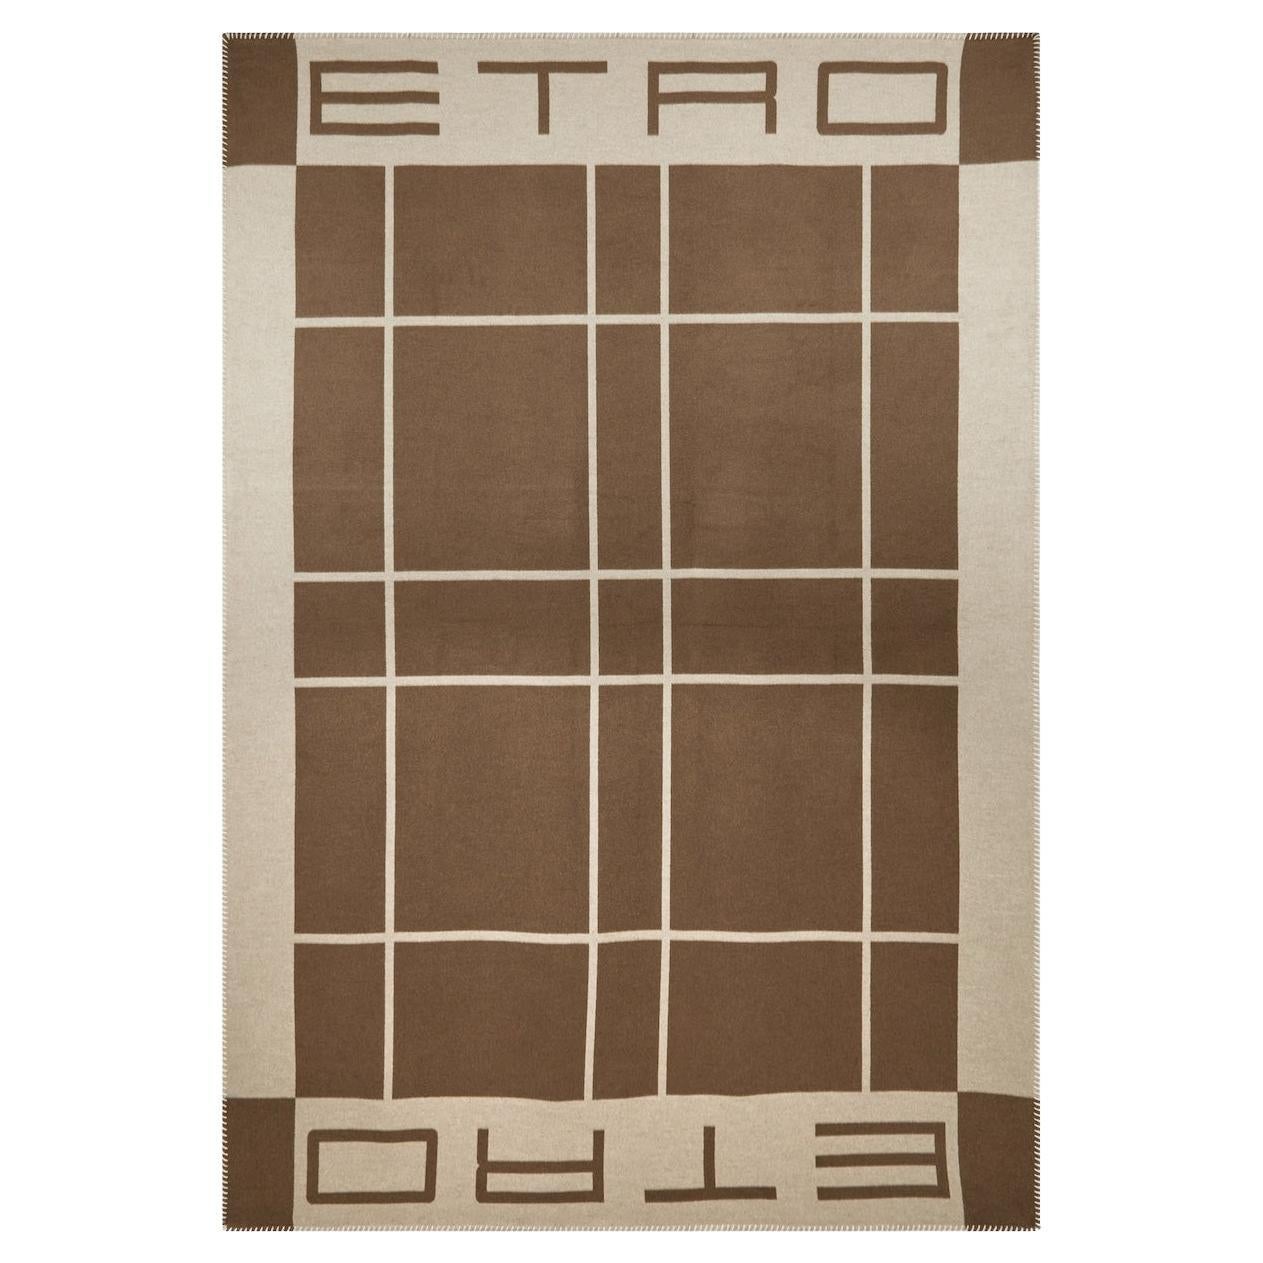 Etro Bani Silk Throw, Chestnut Brown, New in Box, Italy en vente